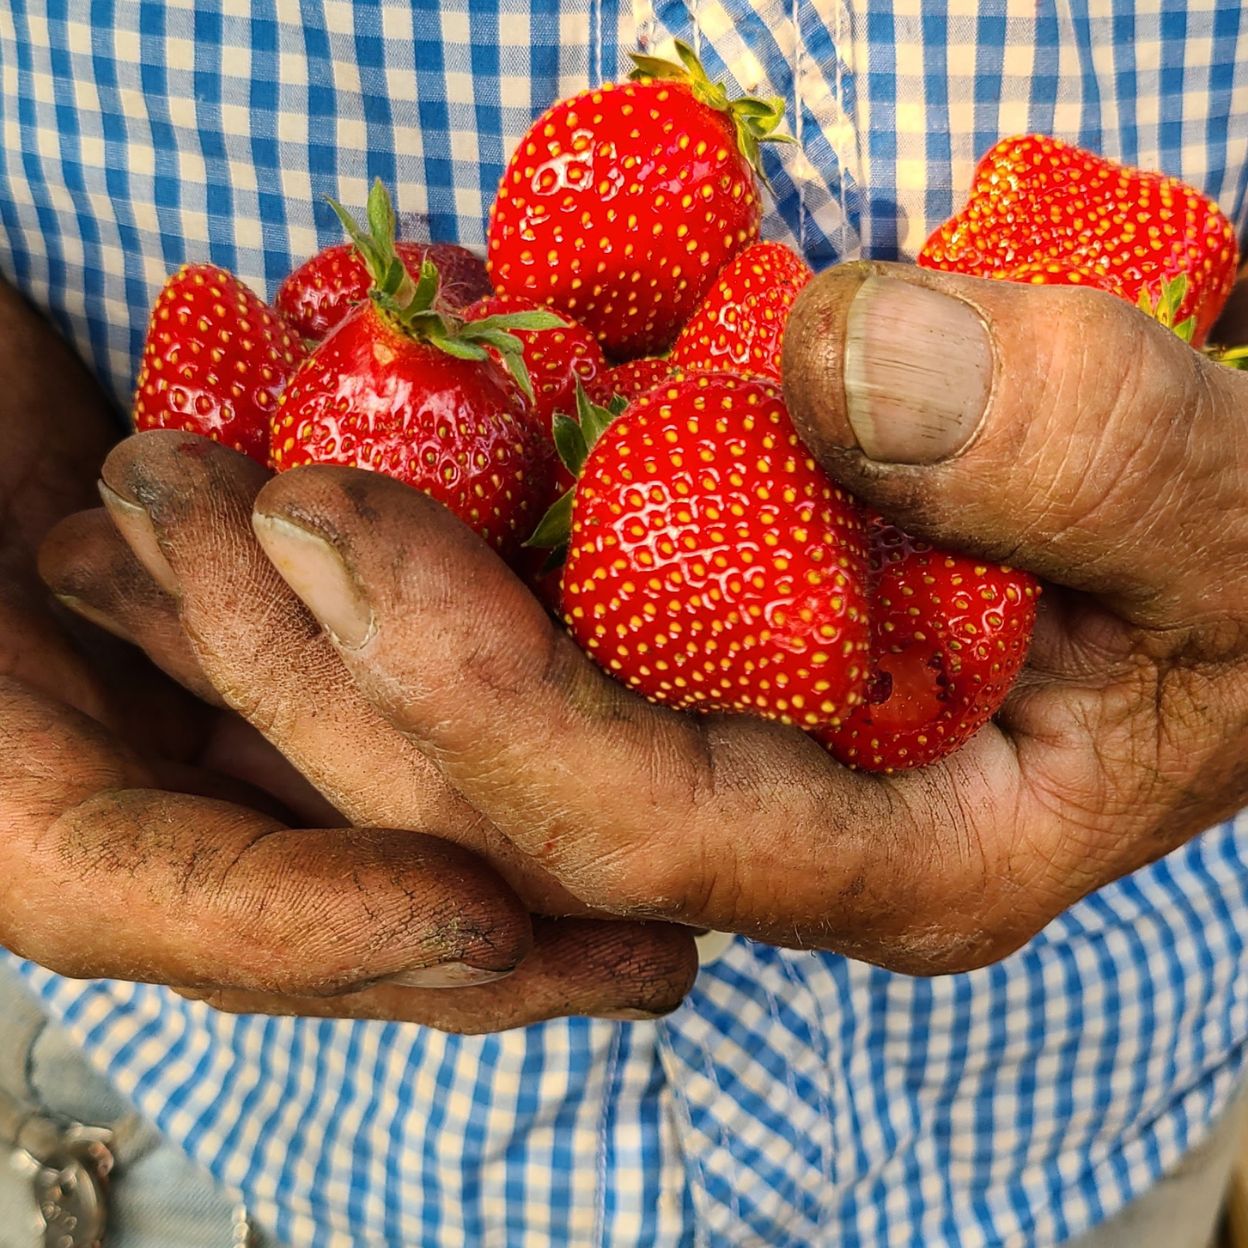 Alberta-glamping-Farm-to-table-food-bike-tour-active-date-deas-tours-in-edmonton-praries-farm-man-holding-fresh-strawberries-from-farm